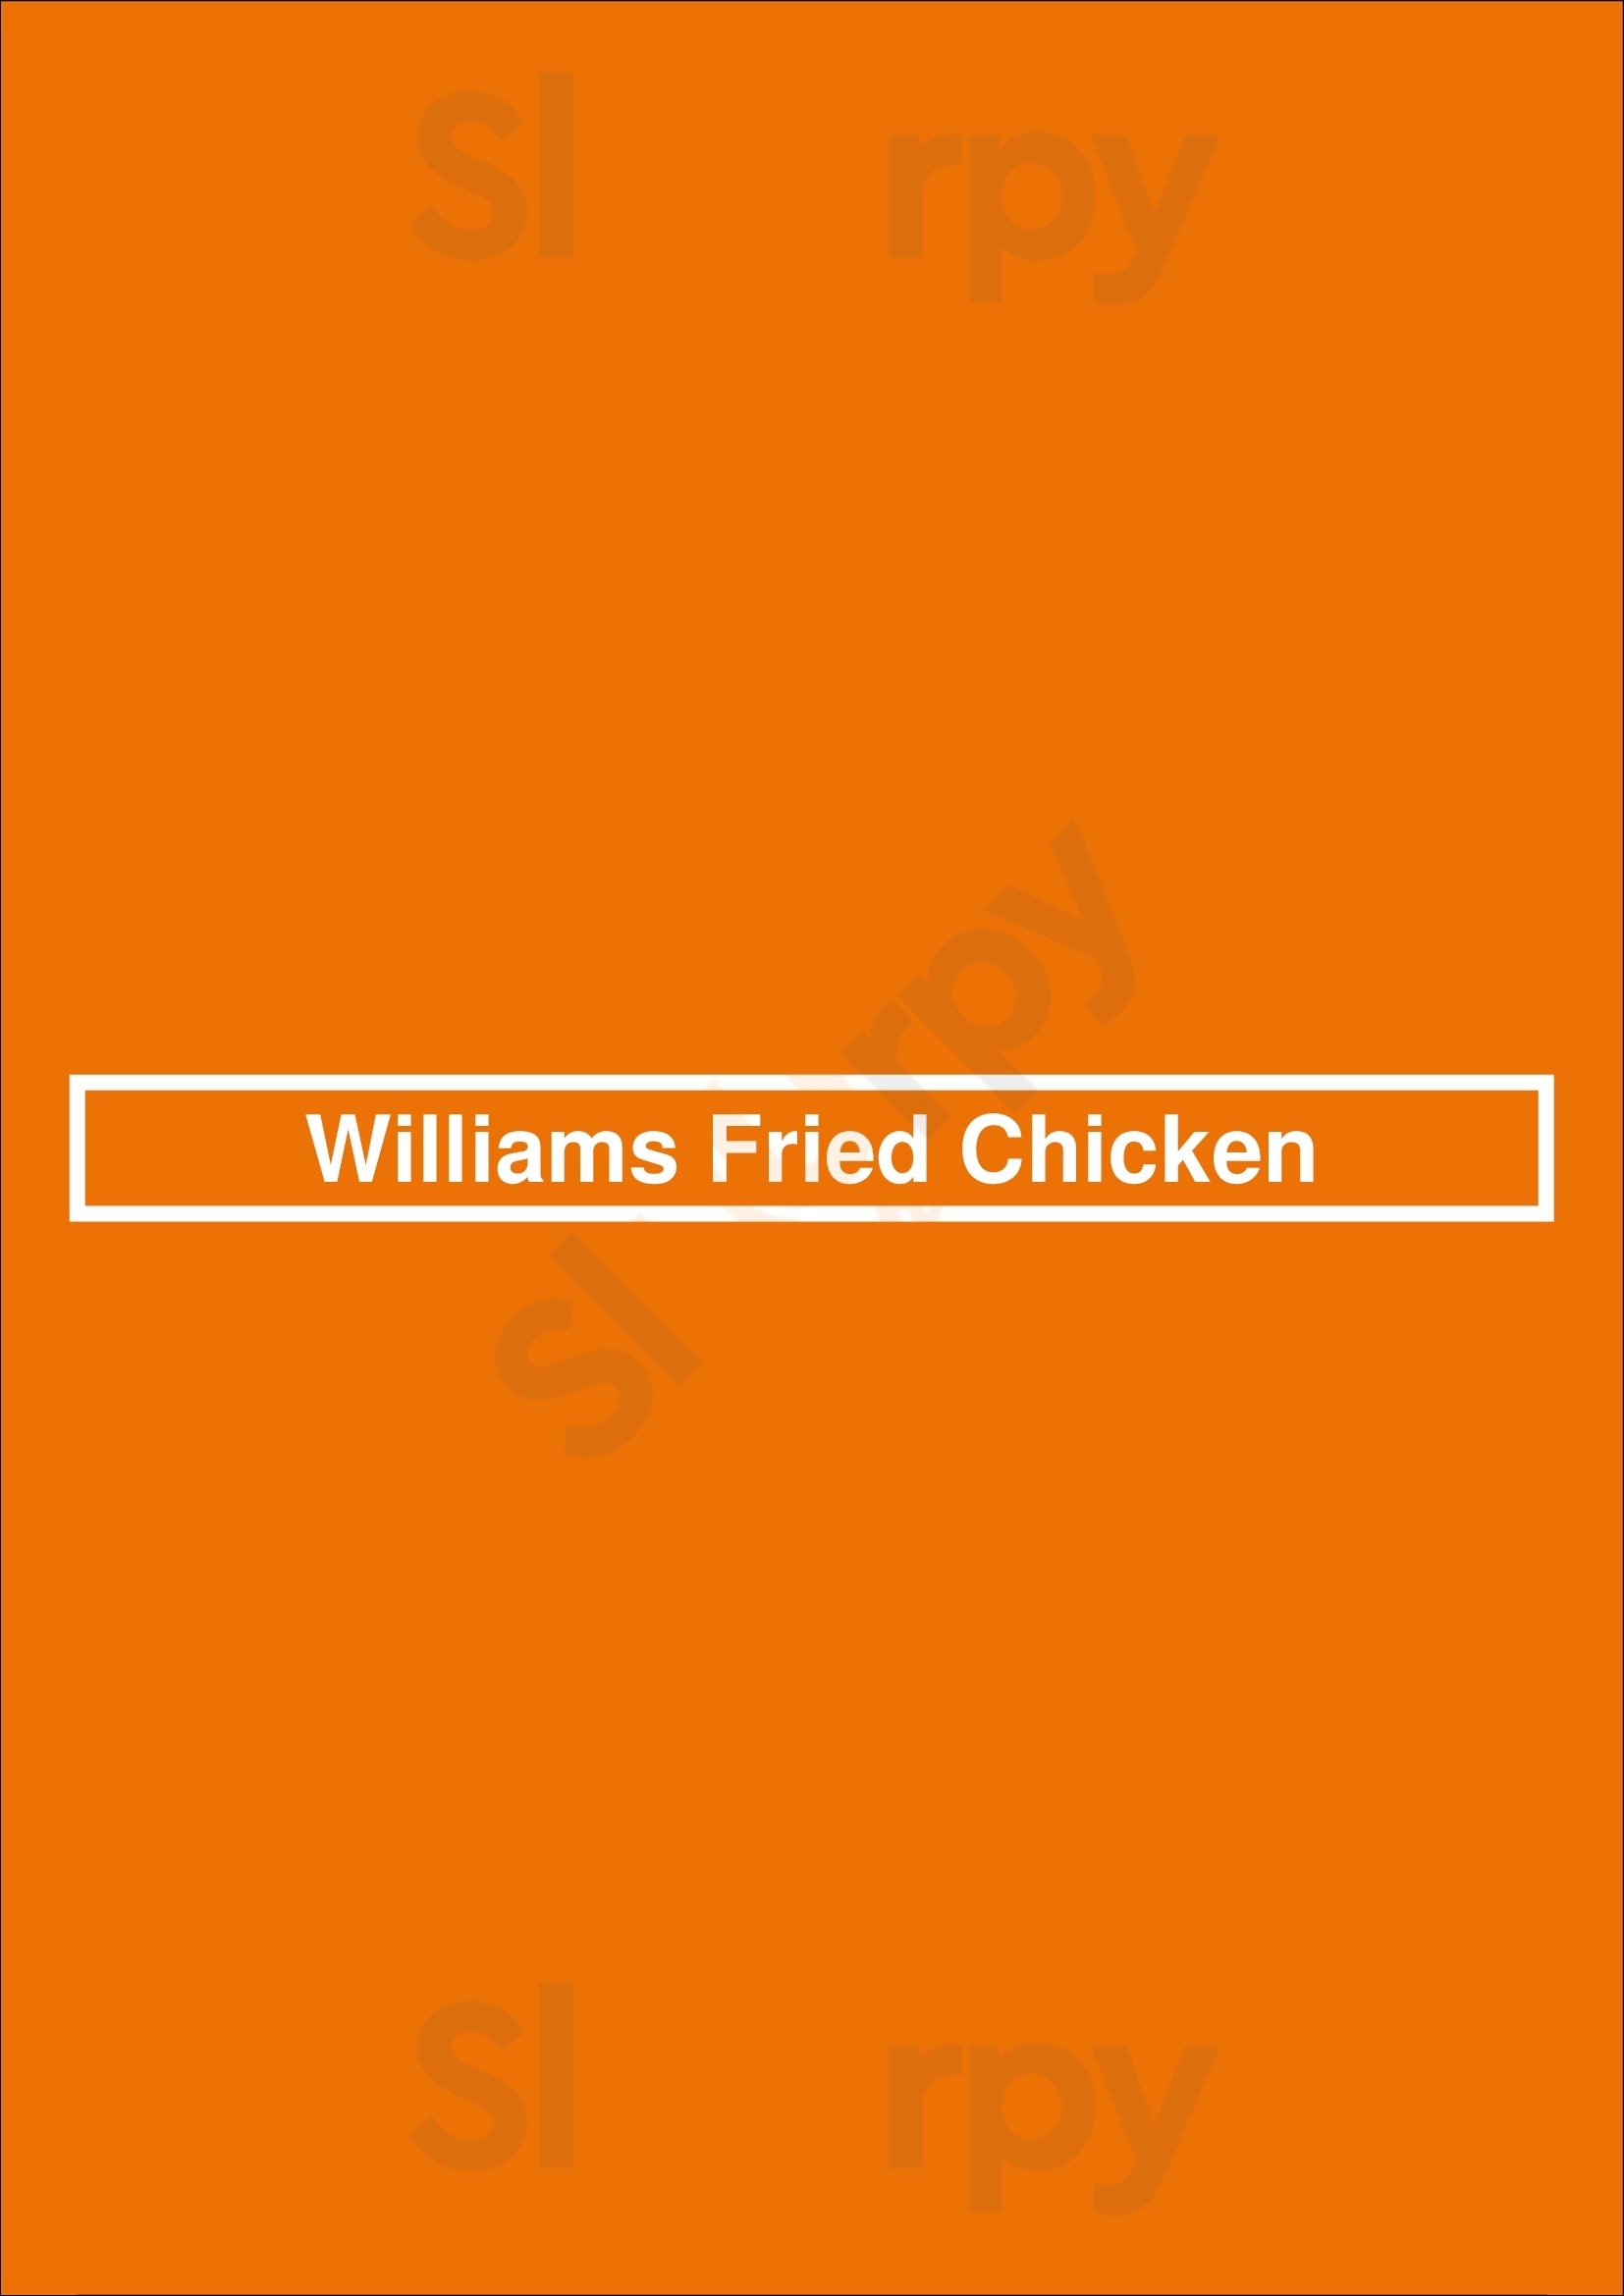 Williams Fried Chicken Dallas Menu - 1